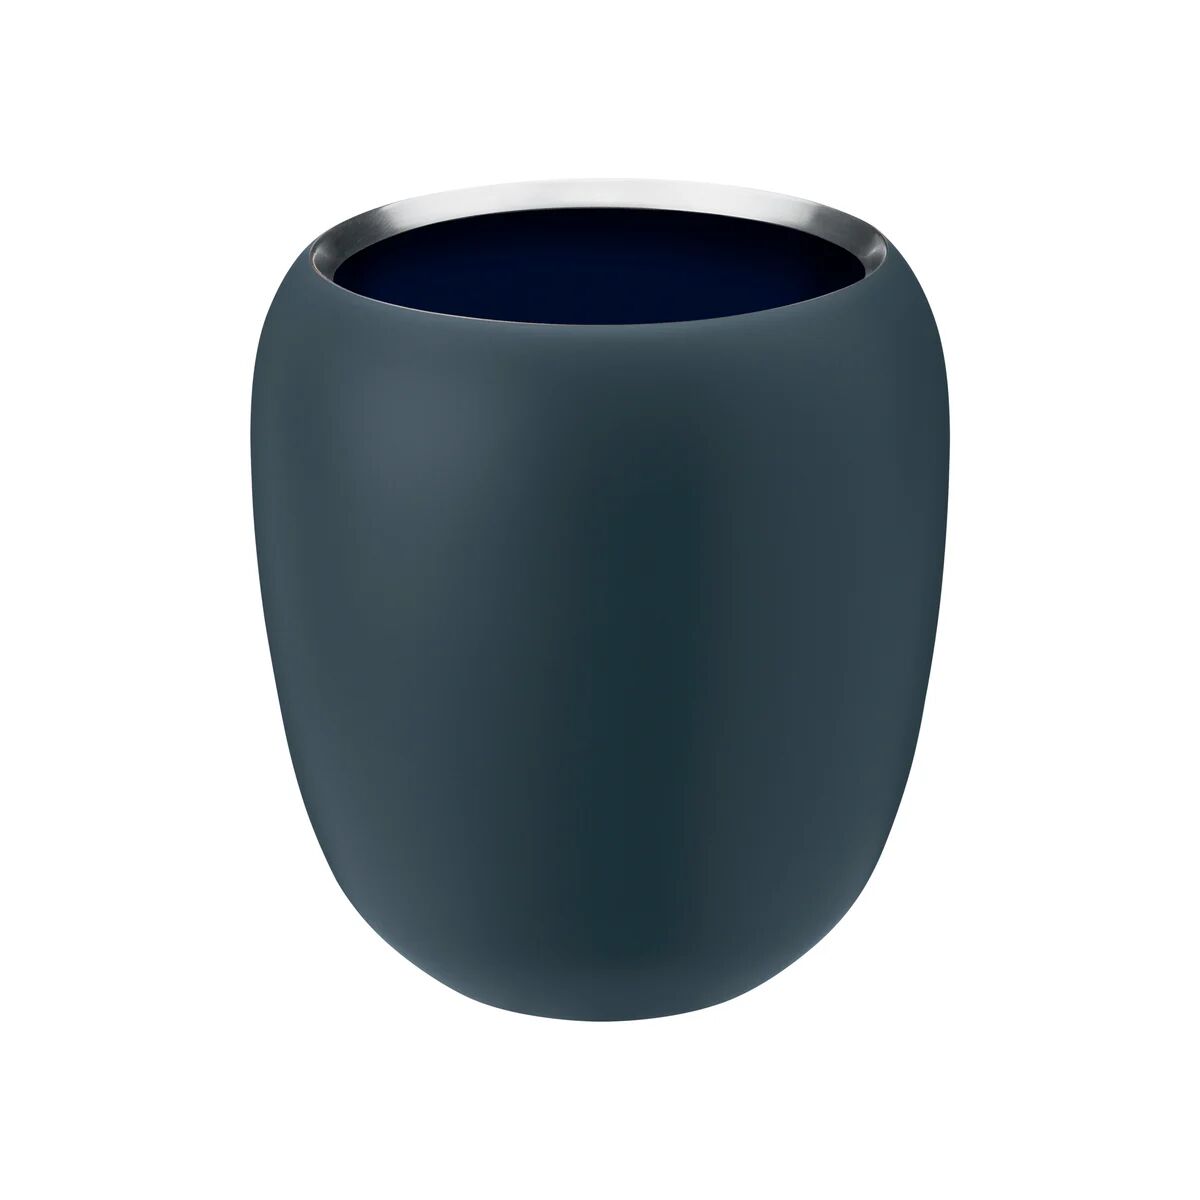 Stelton Ora vase 17 cm Dusty blue-midnight blue